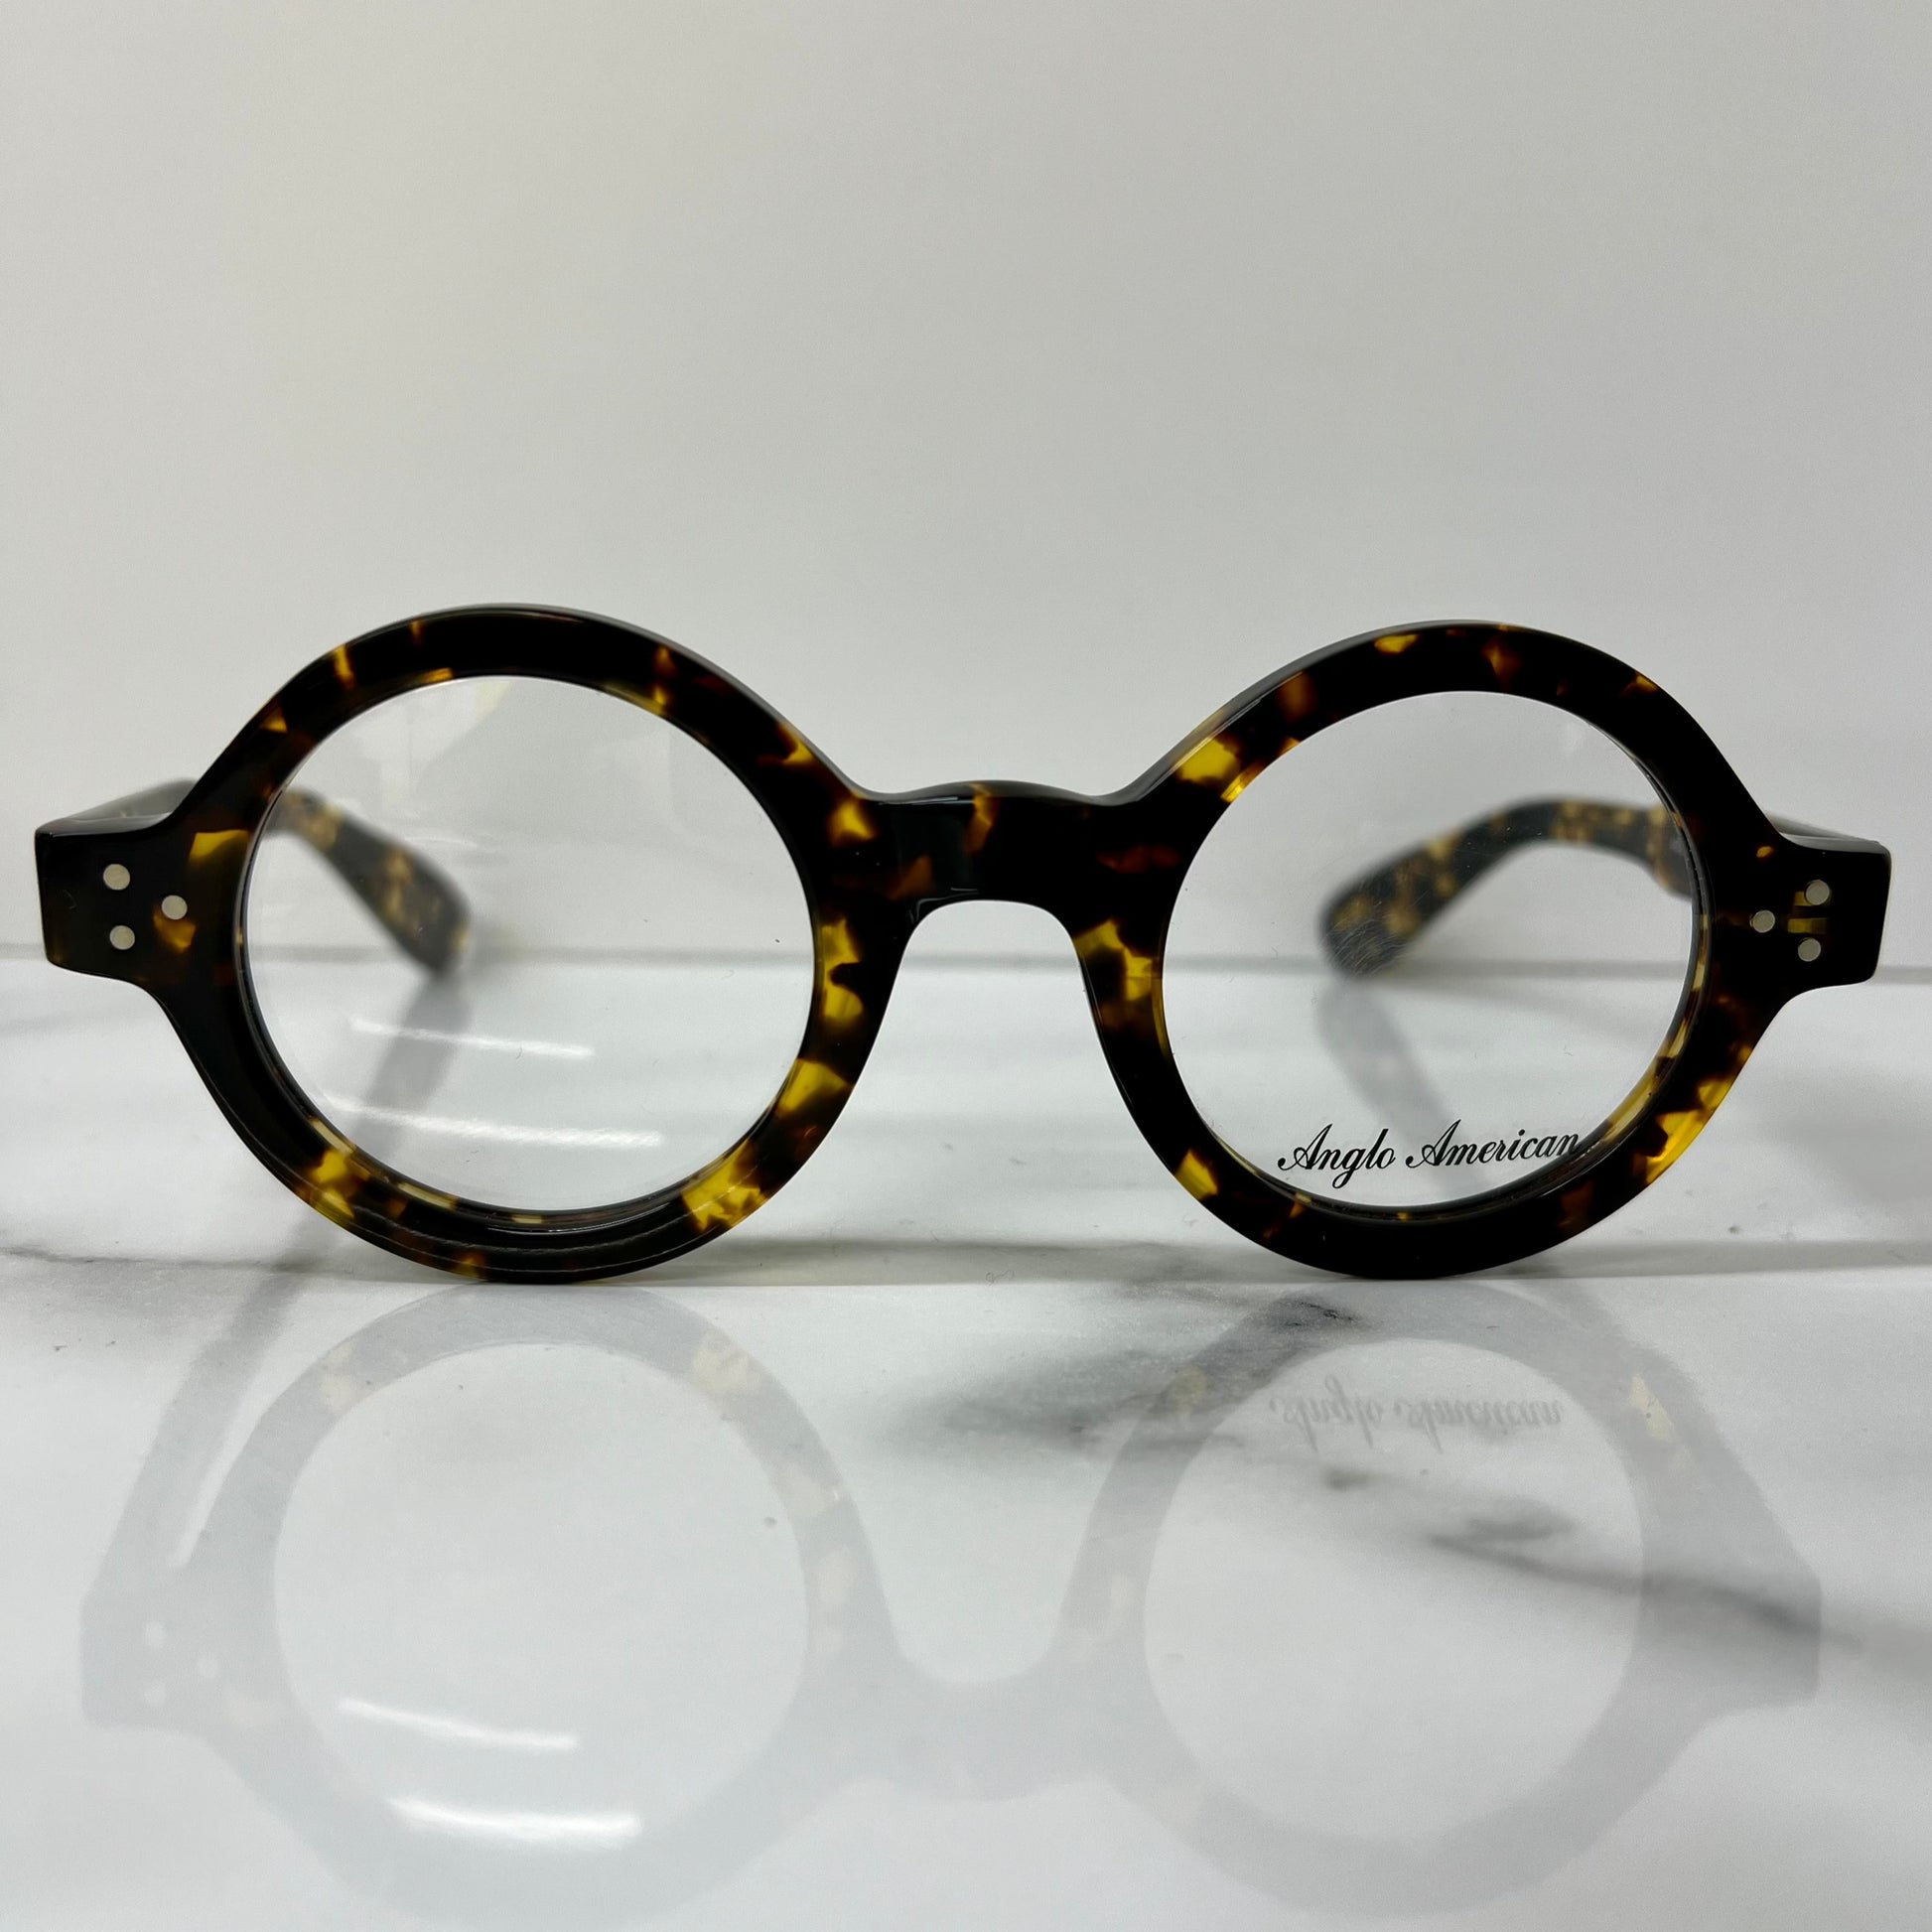 Anglo American Eyeglasses 180E TOSH Tortoise Shell Round Acetate Glasses Frames.